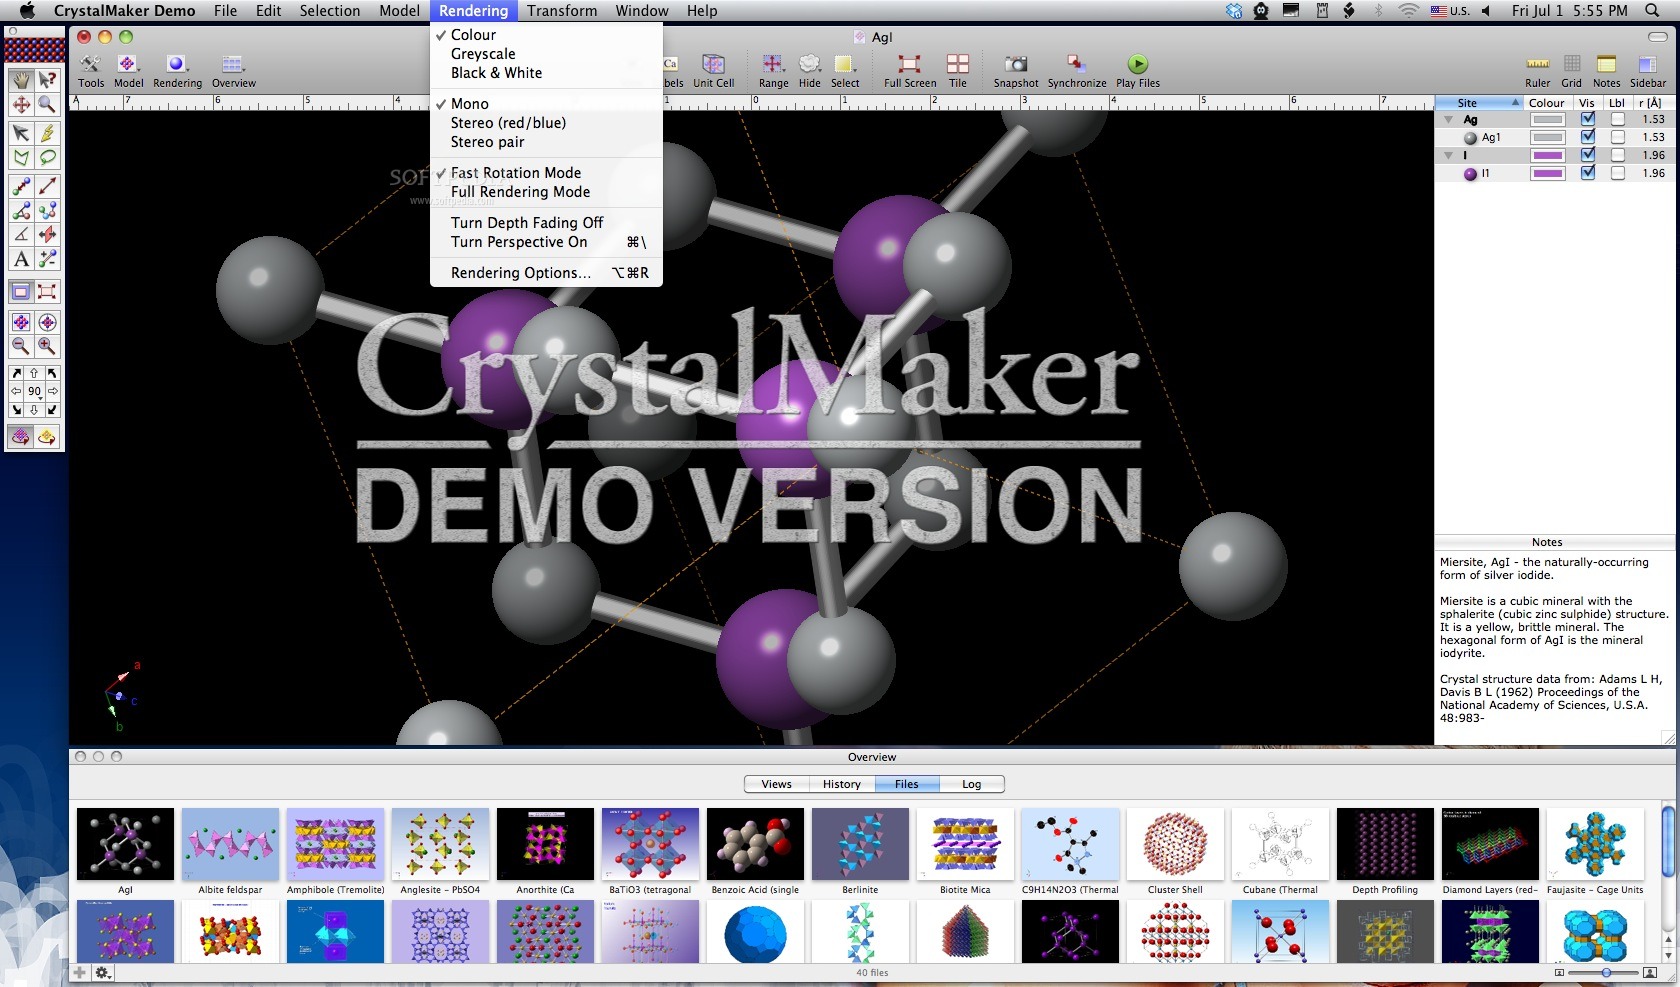 crystalmaker diffraction pattern